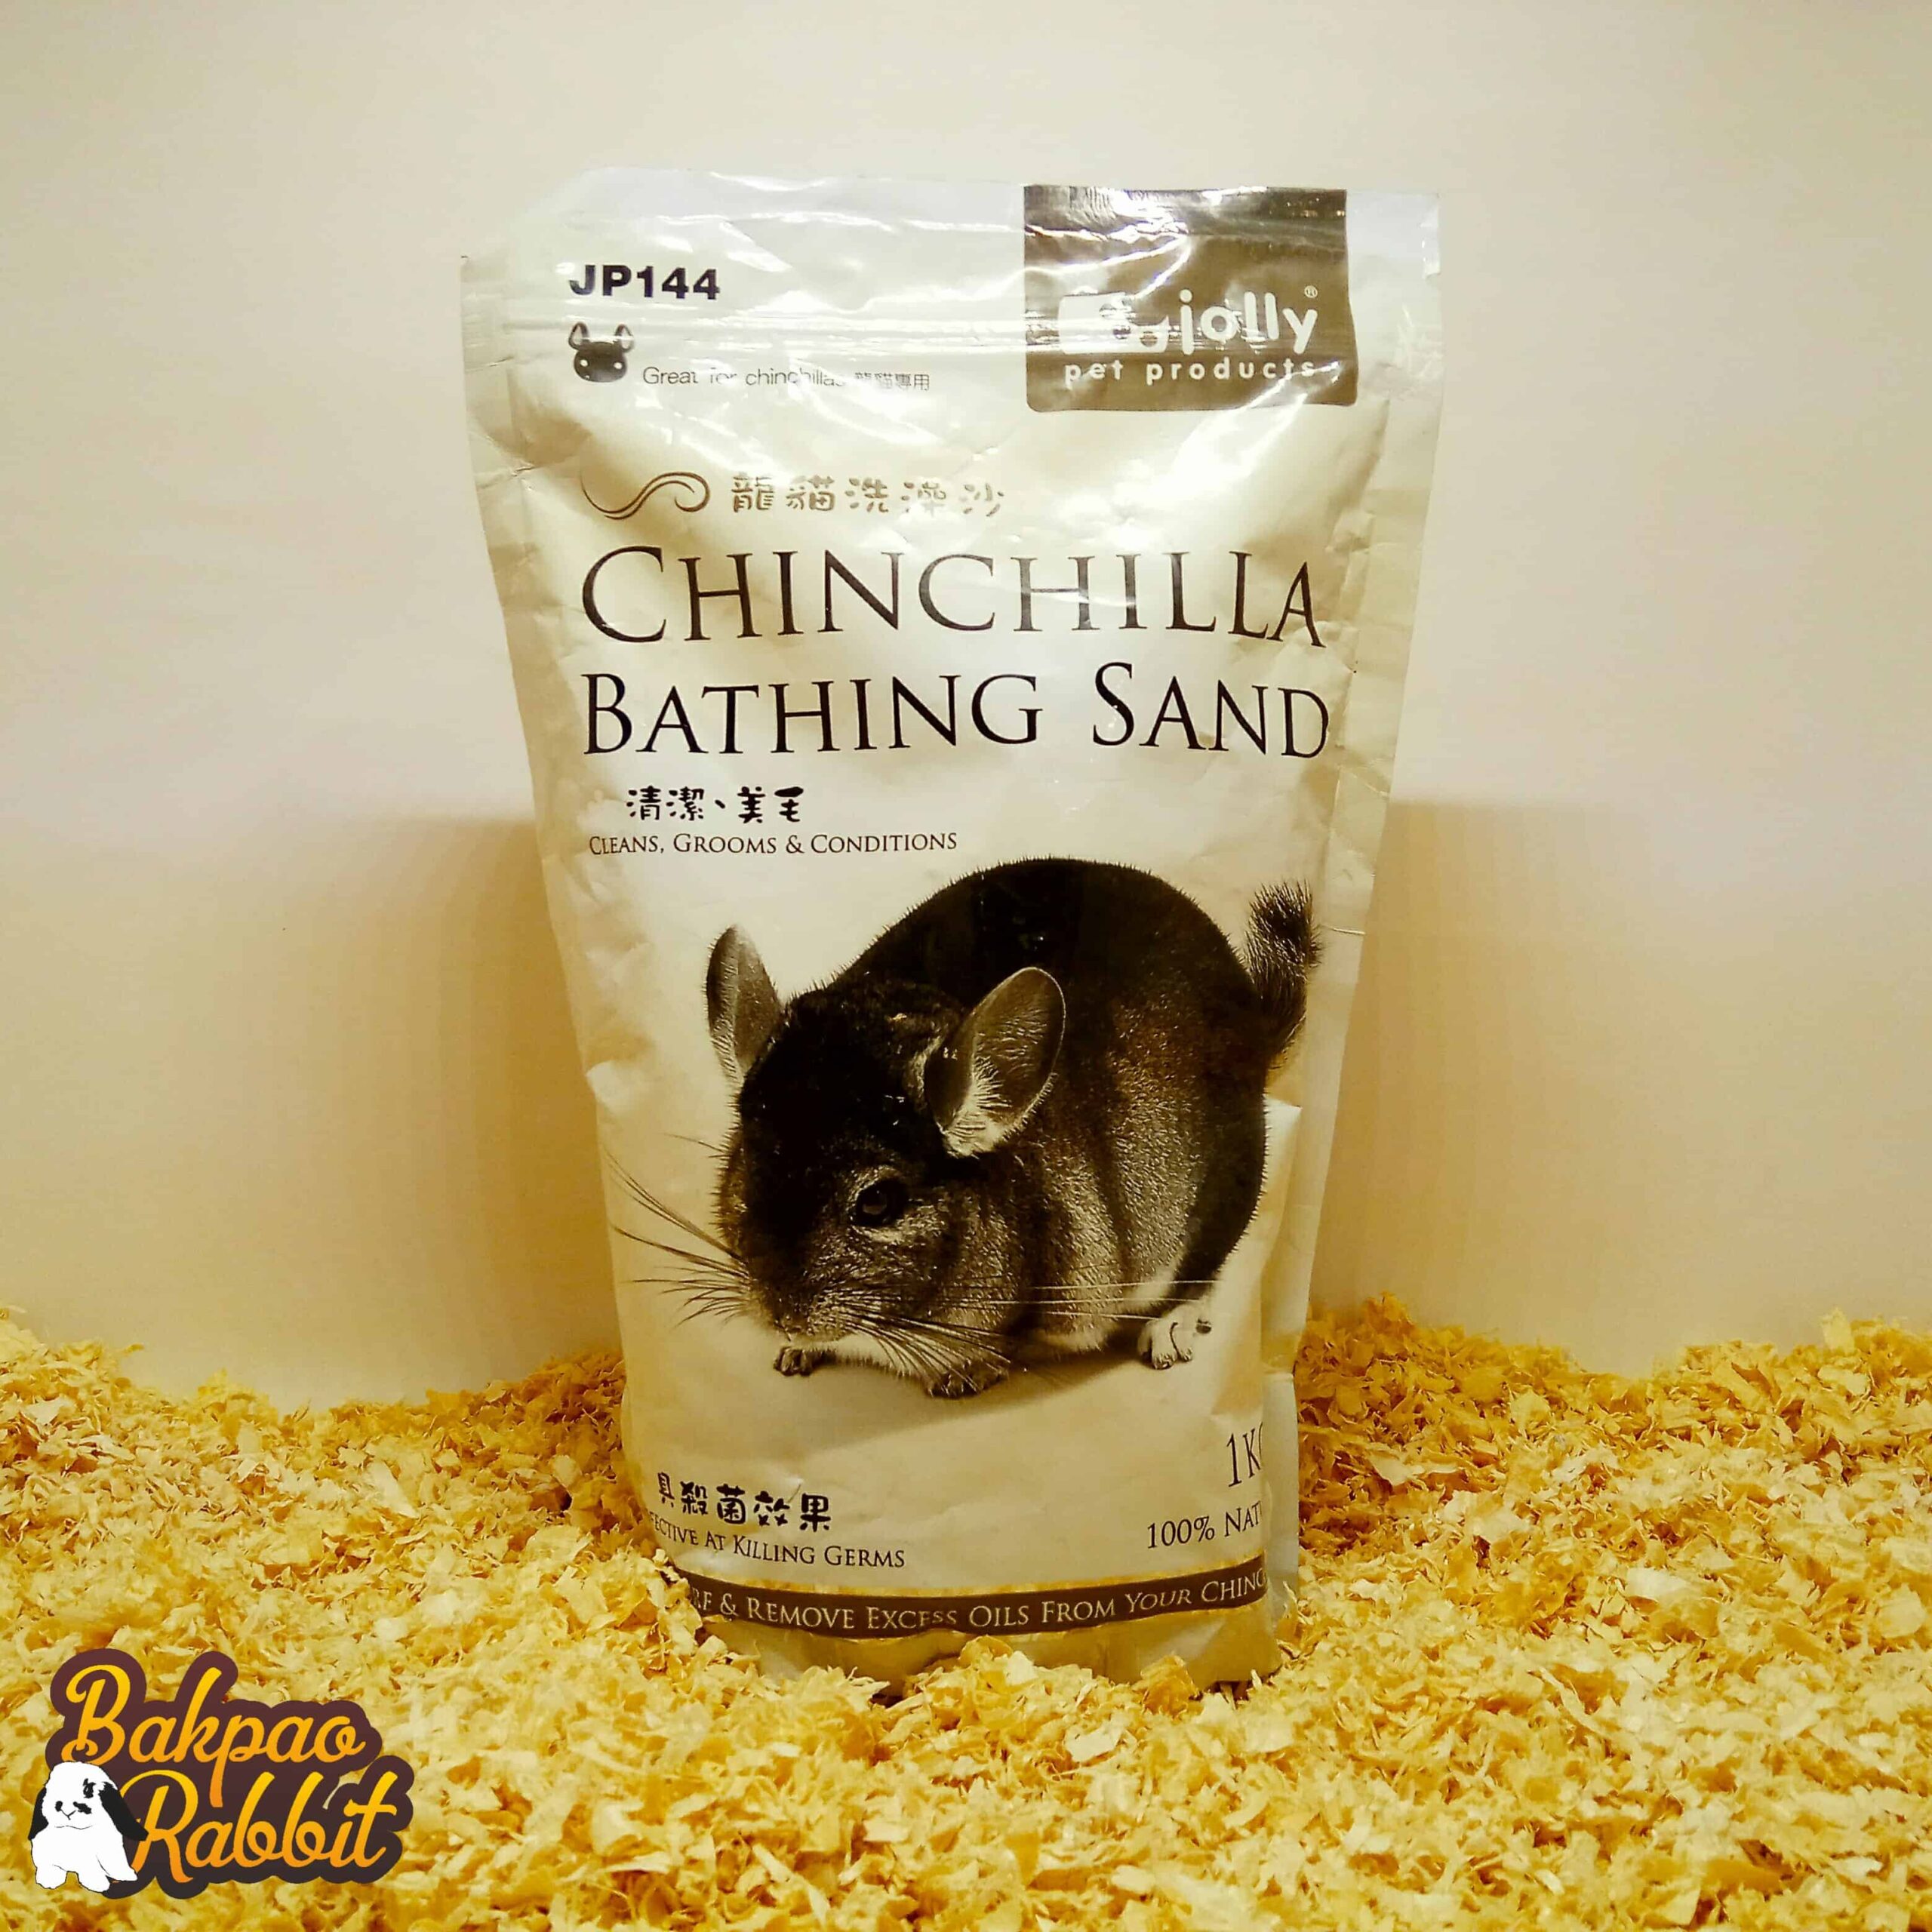 Jolly JP144 Chinchilla Bathing Sand 1kg